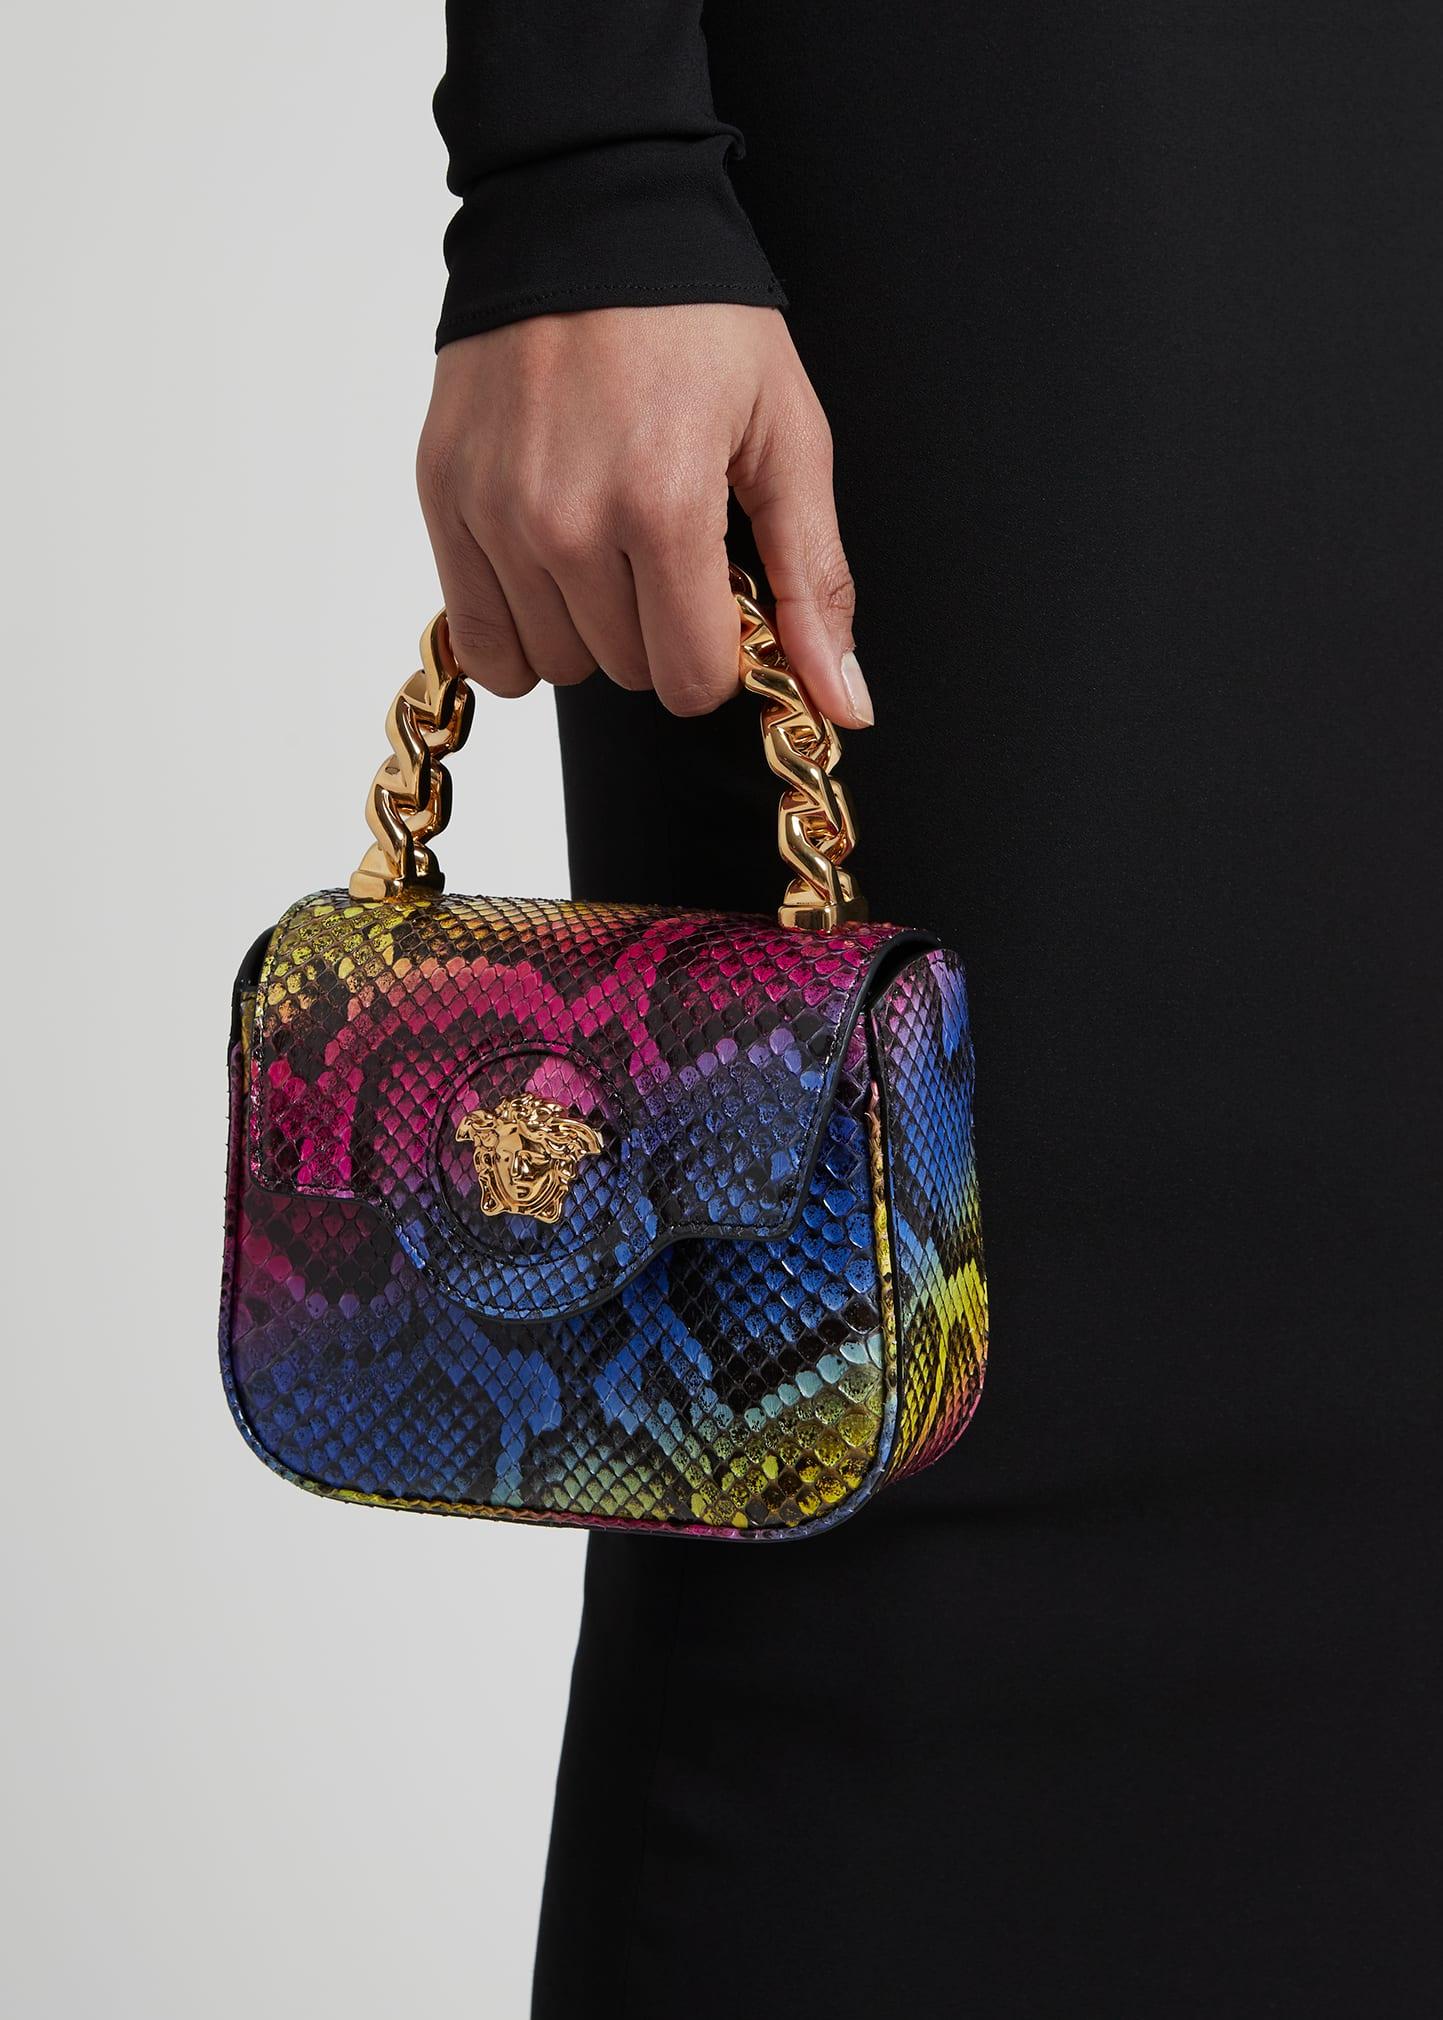 Versace La Medusa Python Small Handbag for Women